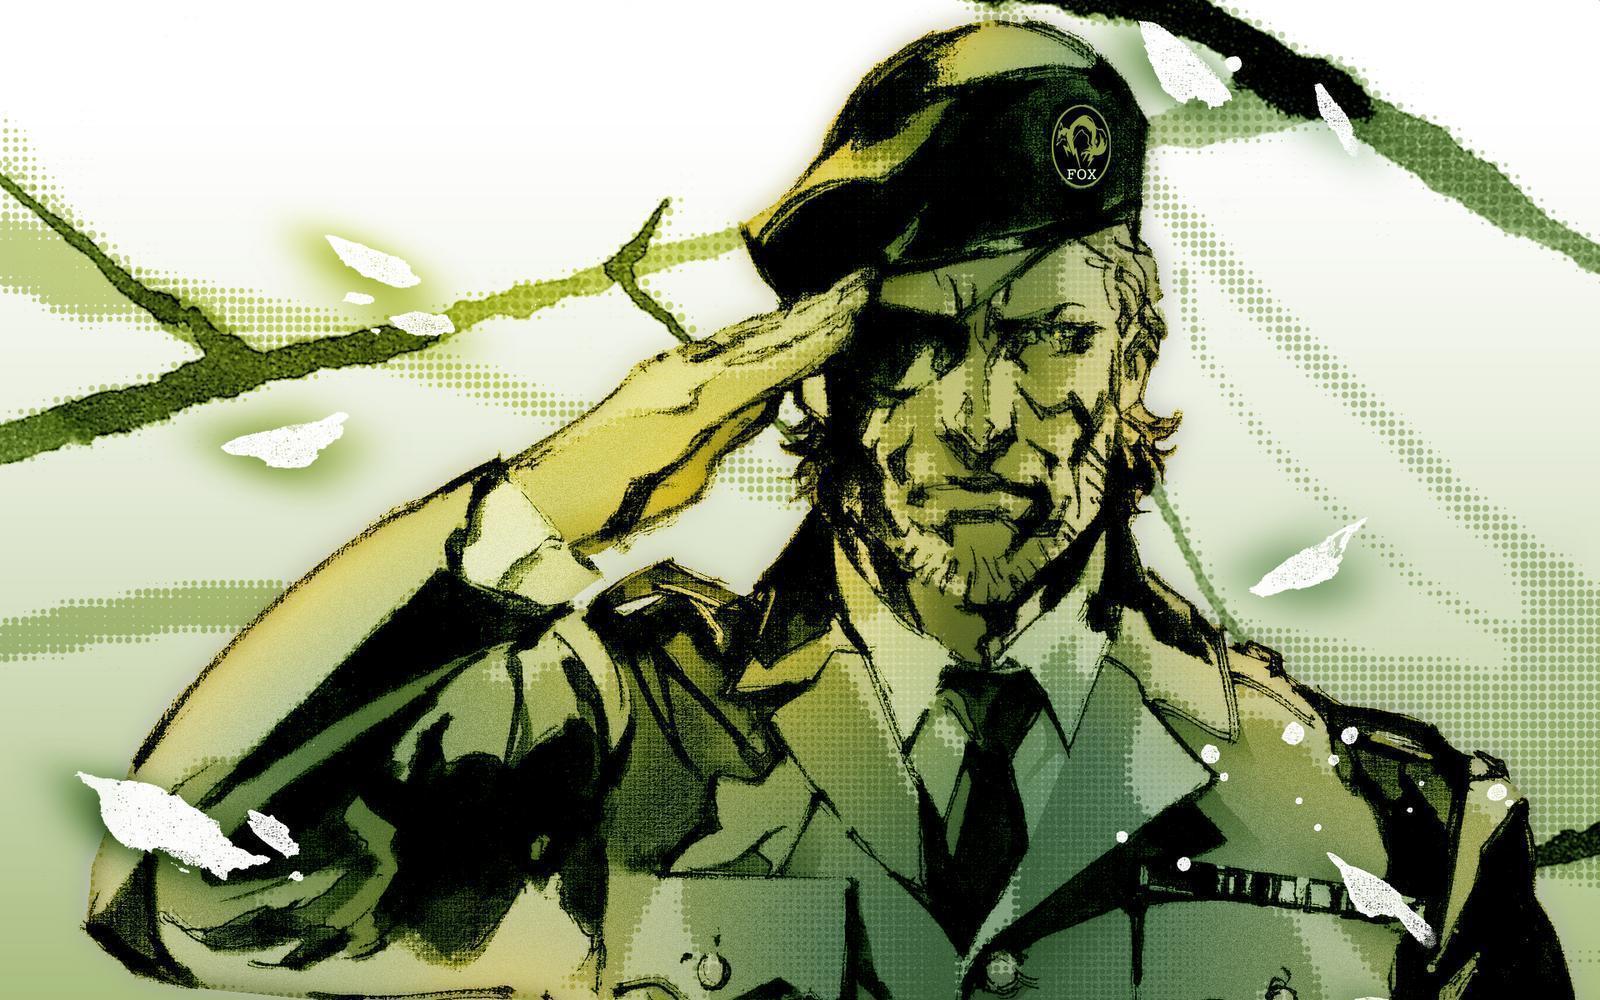 Solid Snake Wallpaper. Metal Gear Solid Snake Image